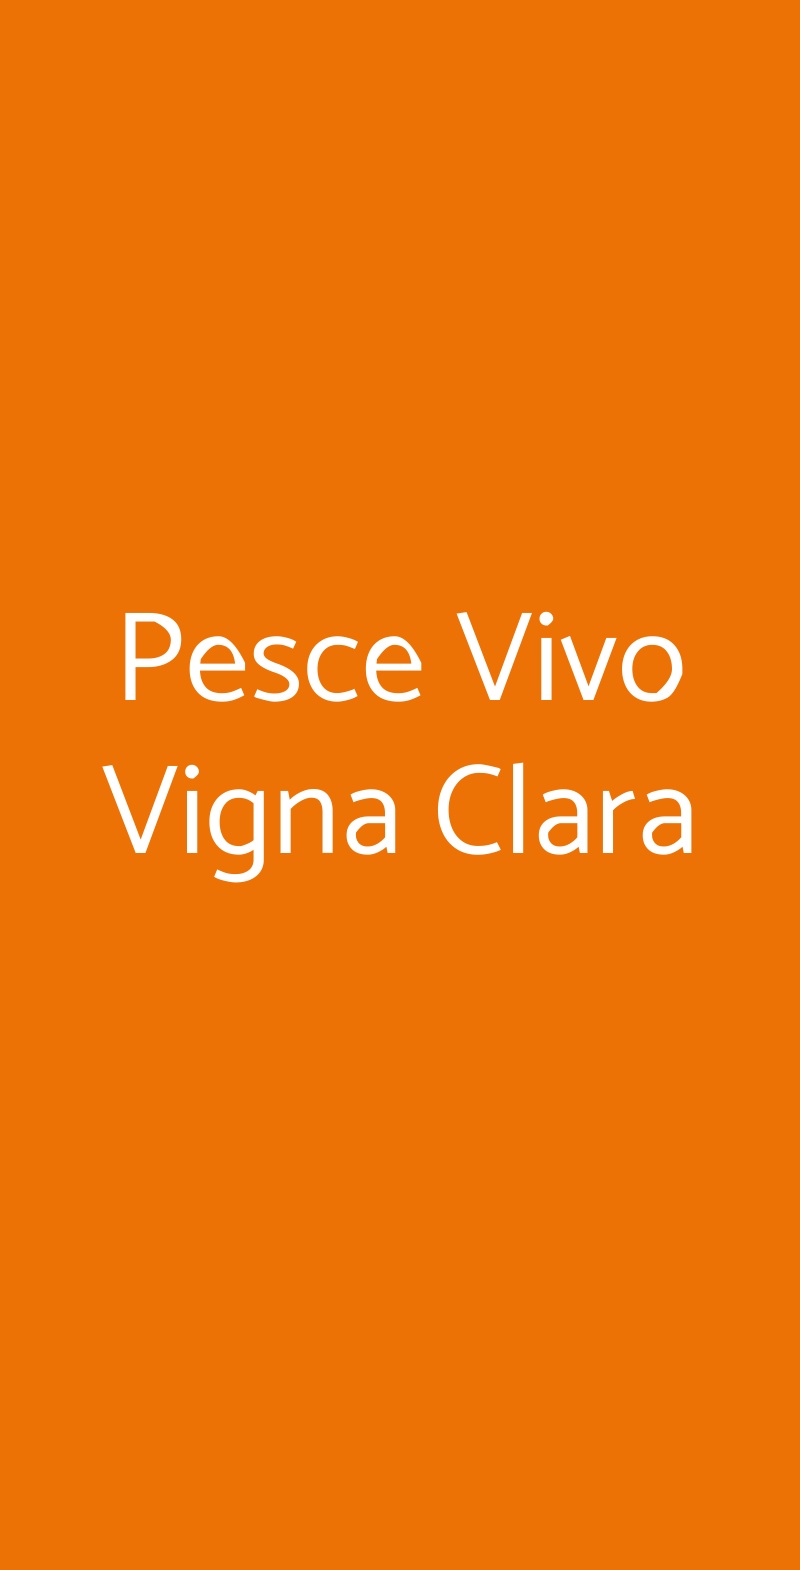 Pesce Vivo Vigna Clara Roma menù 1 pagina